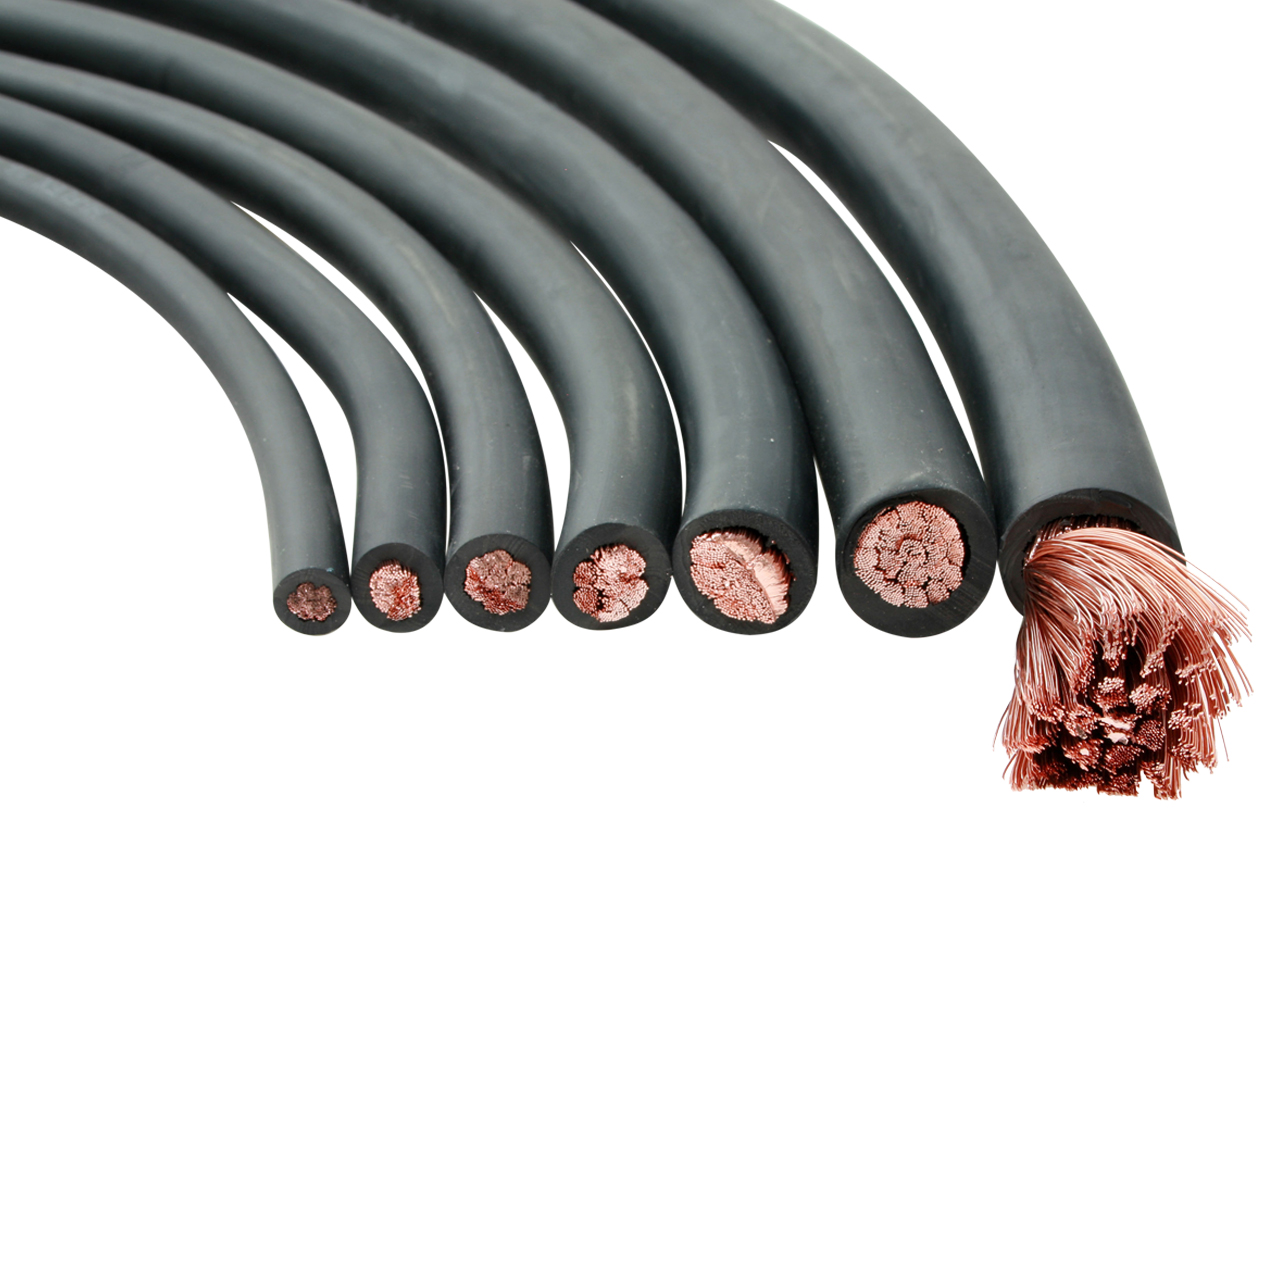 Schweißkabel Hi-Flex/Simplex, Meterware, PVC Mantel, schwarz, Schweißkabel  Hi-Flex, mit PVC Mantel, schwarz, Schweißkabel, Kabel, Schweißzubehör